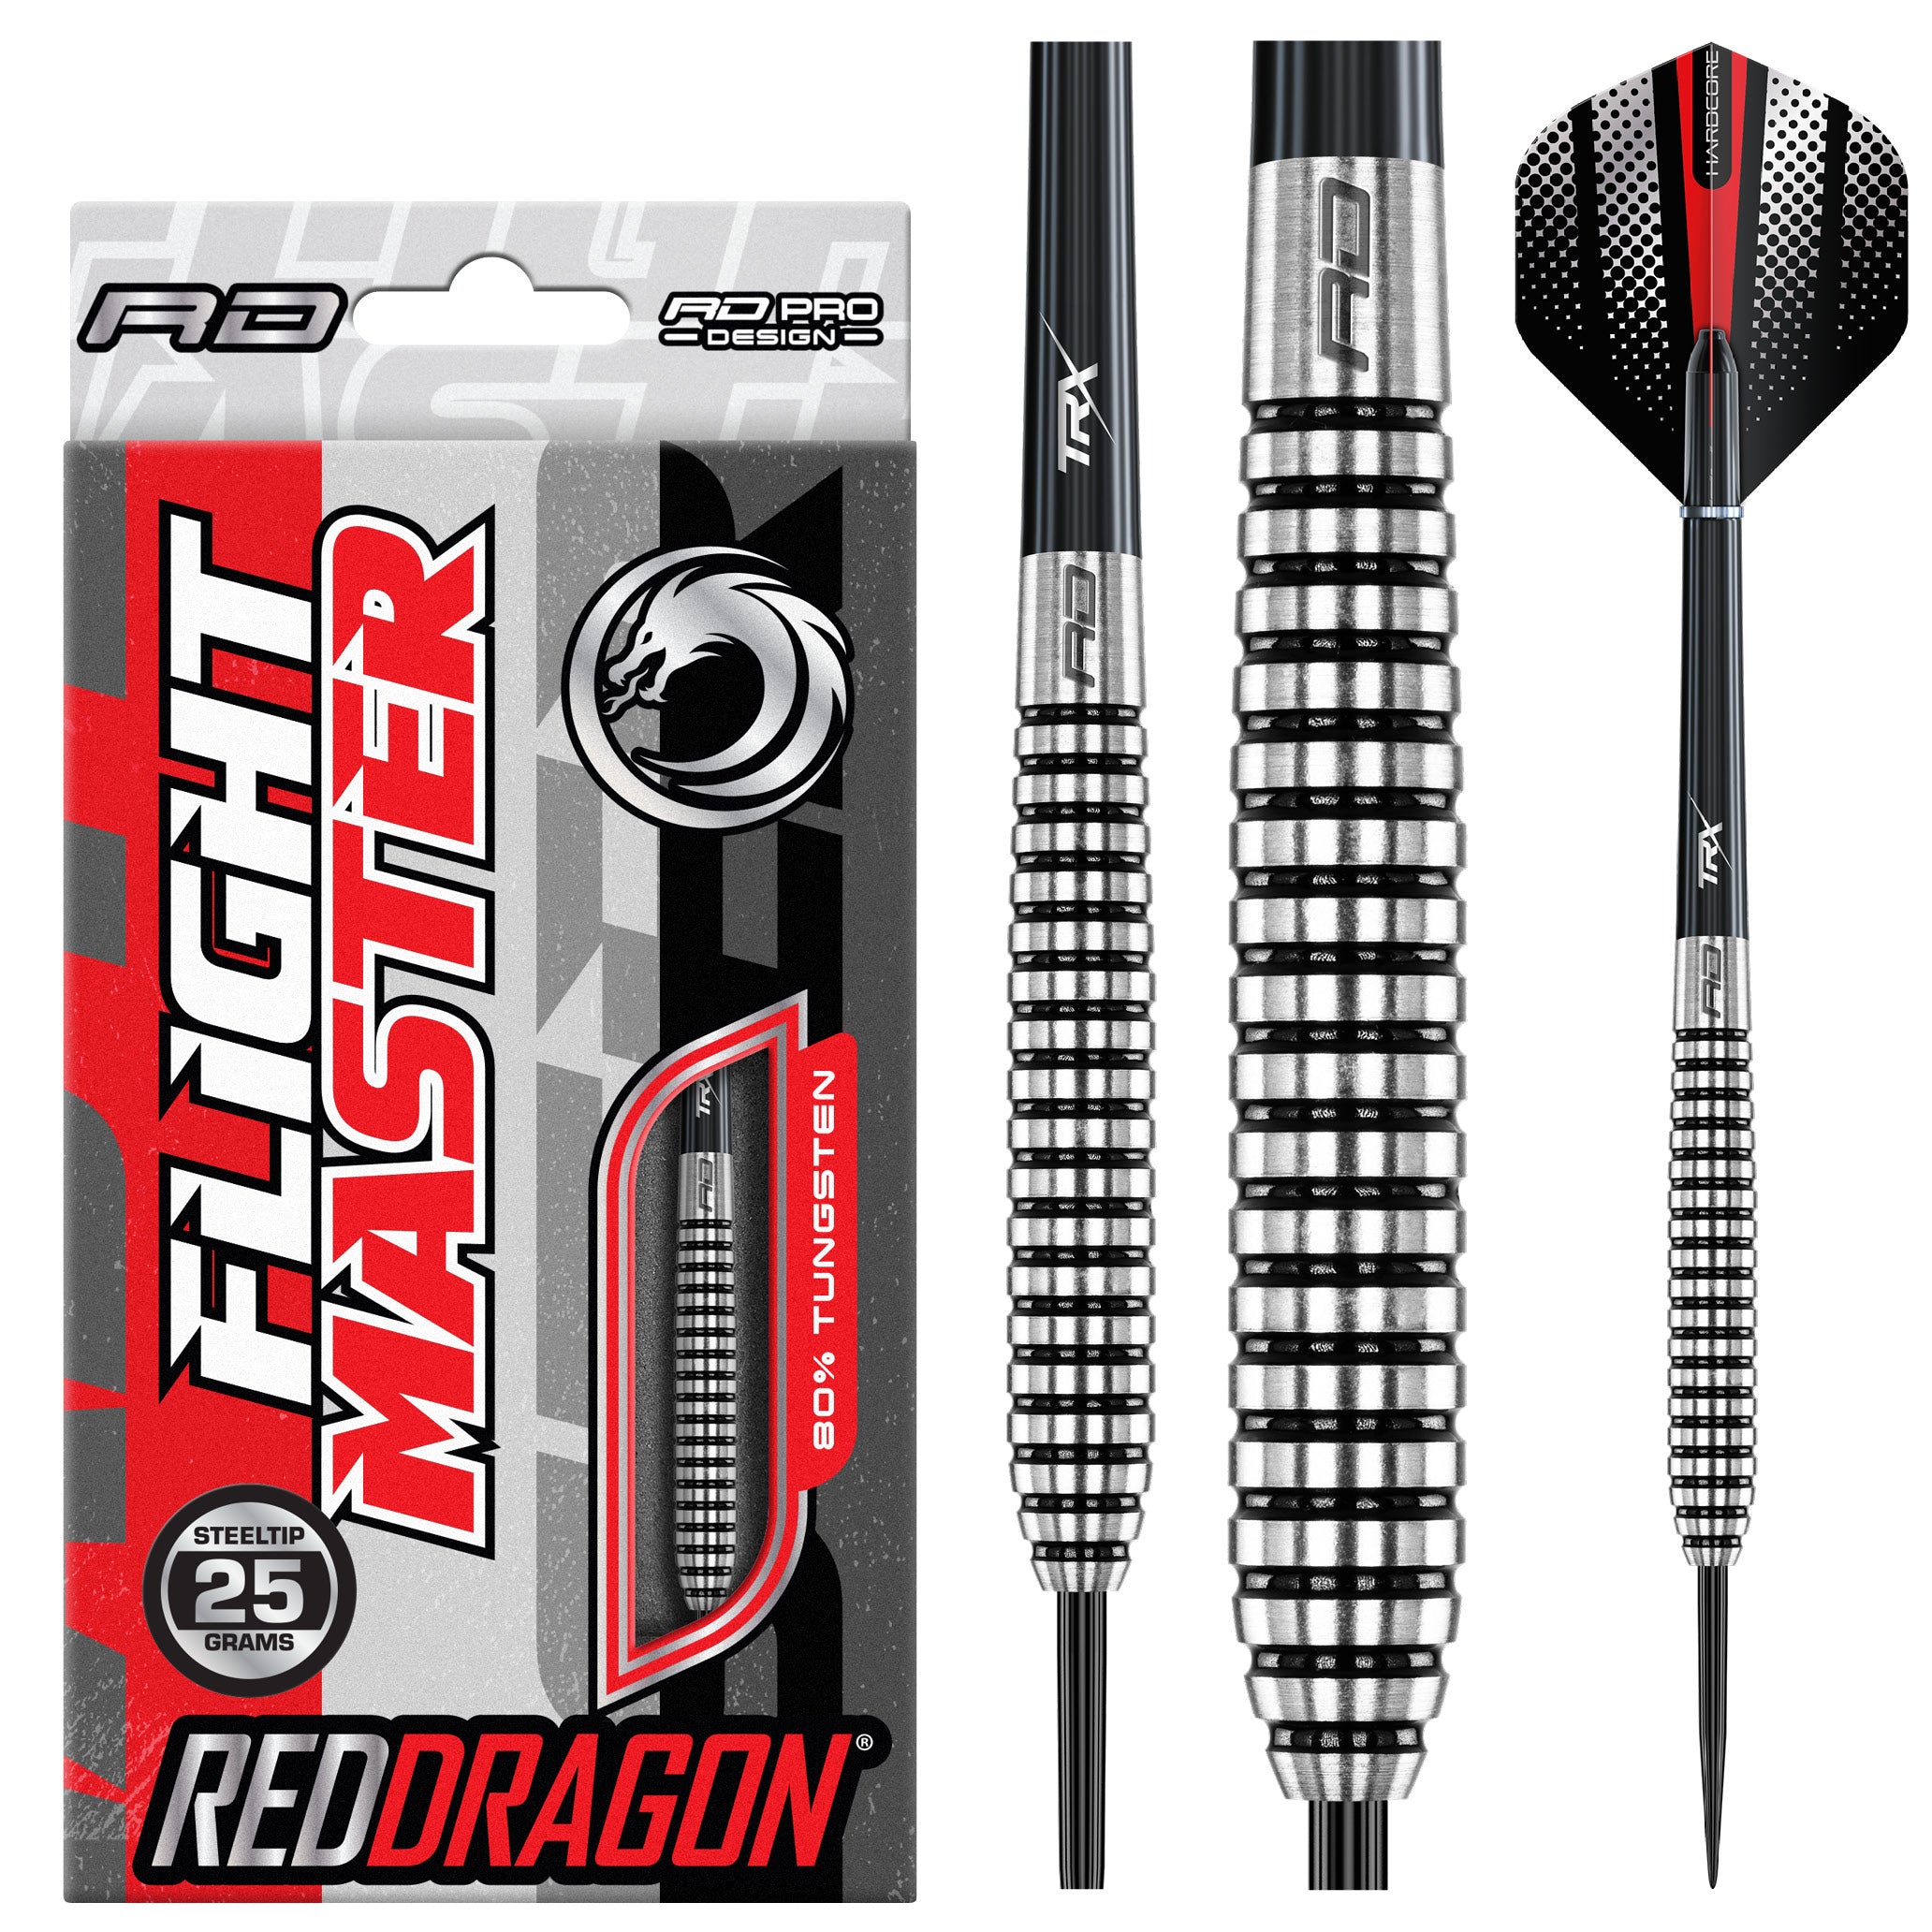 All Darts | Red Dragon Darts